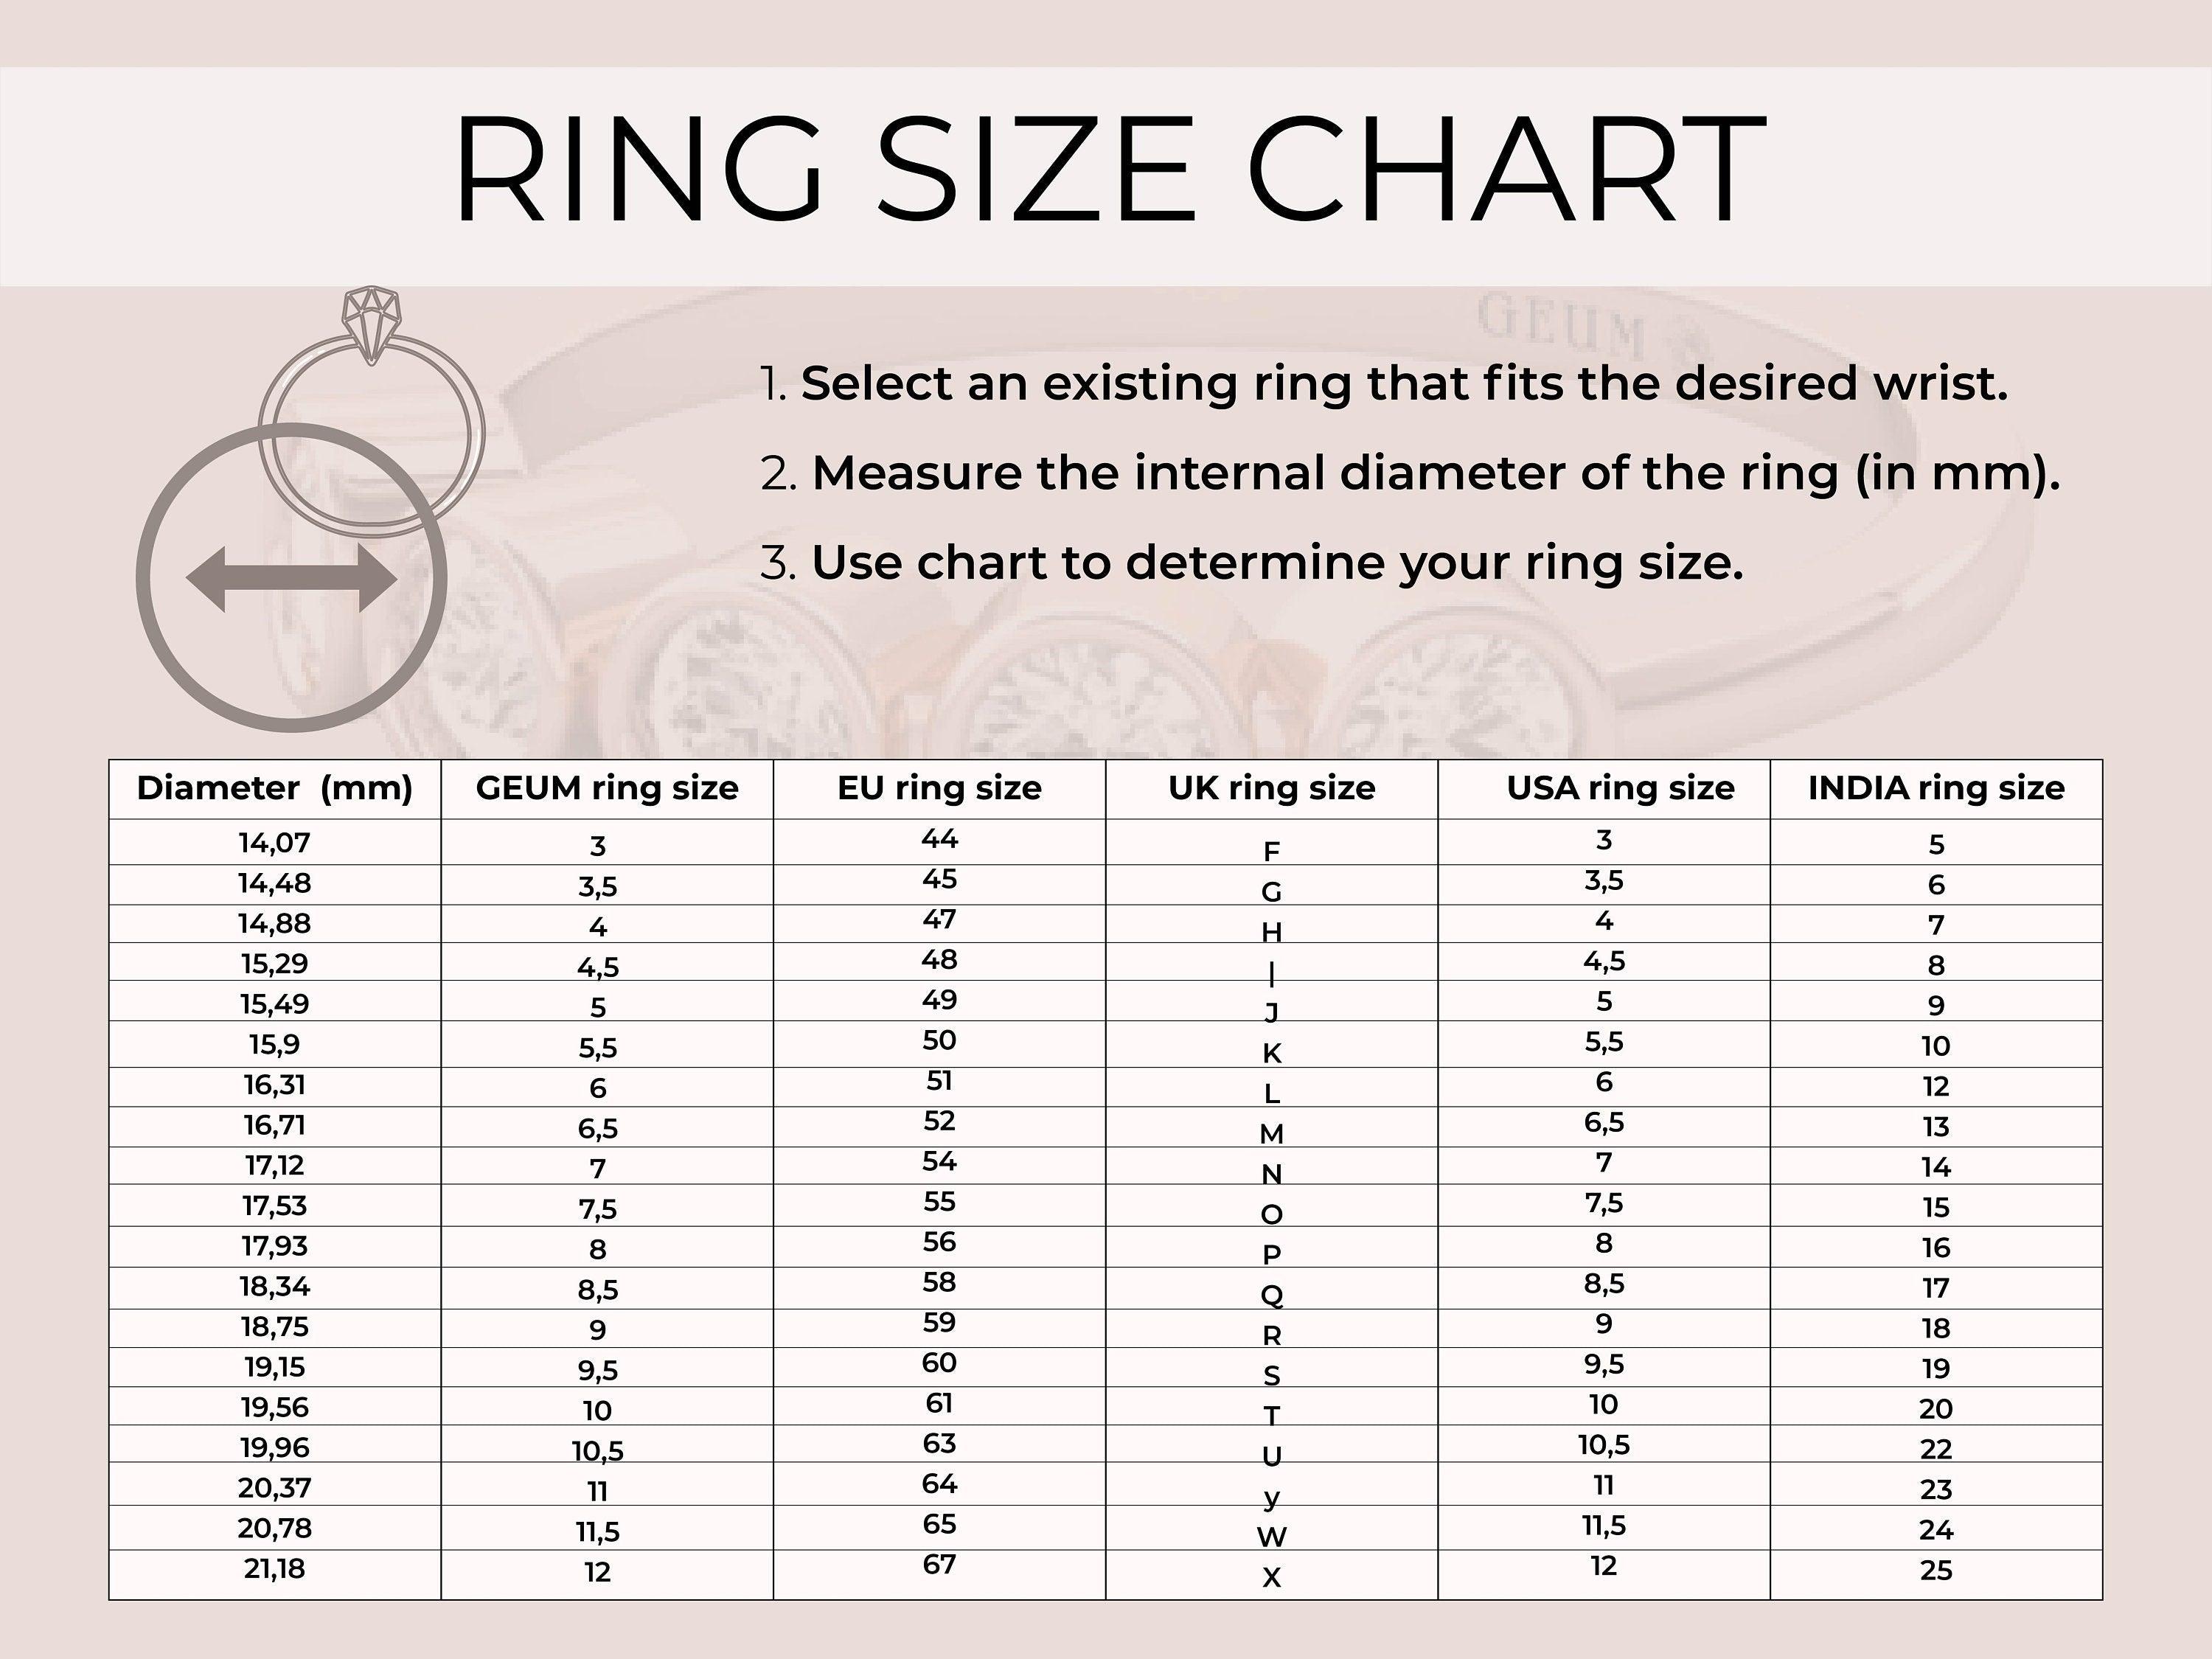 Handmade Real Gold Ring, Natural White Diamond Ring, 10kt 14 kt 18kt Yellow White Gold Ring - GeumJewels